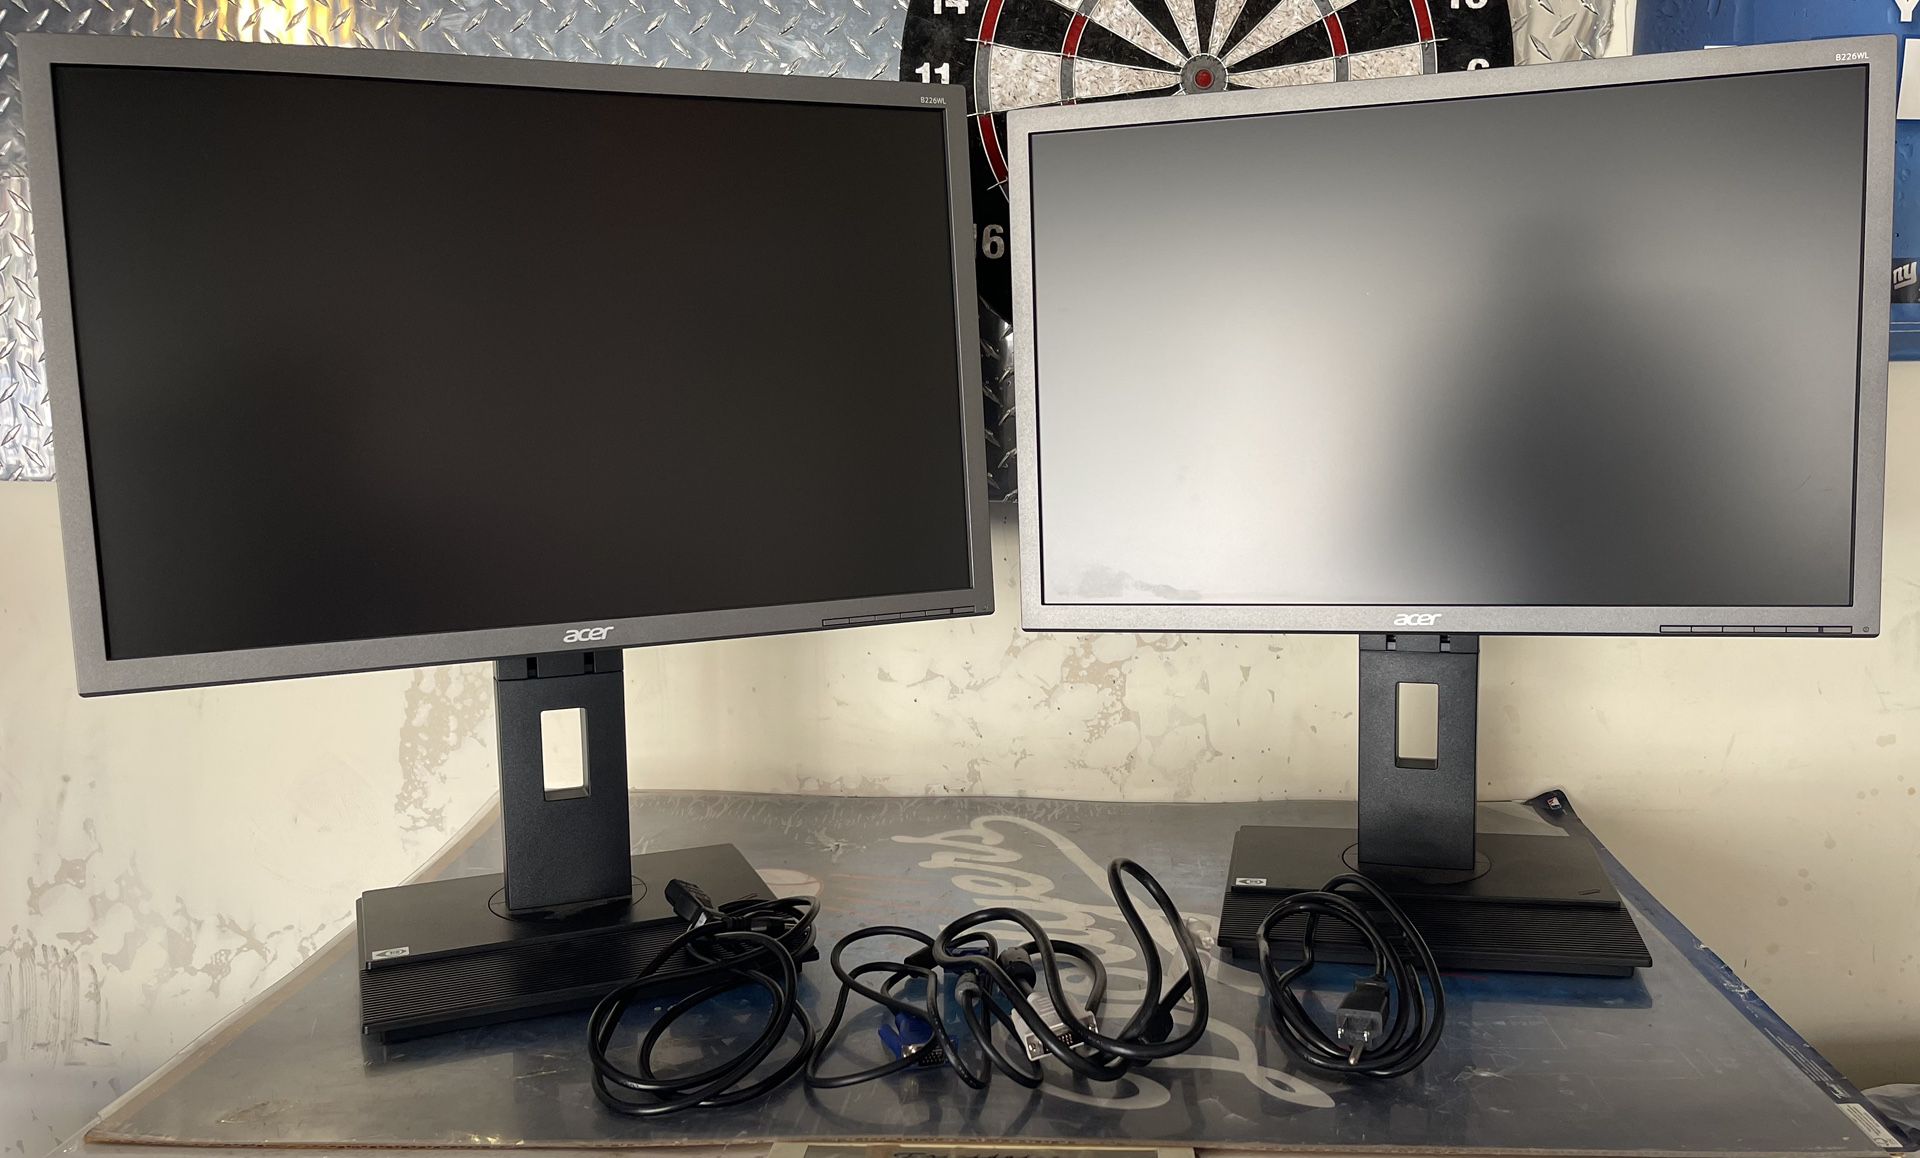 2 Acer 22” LCD Computer Monitors 